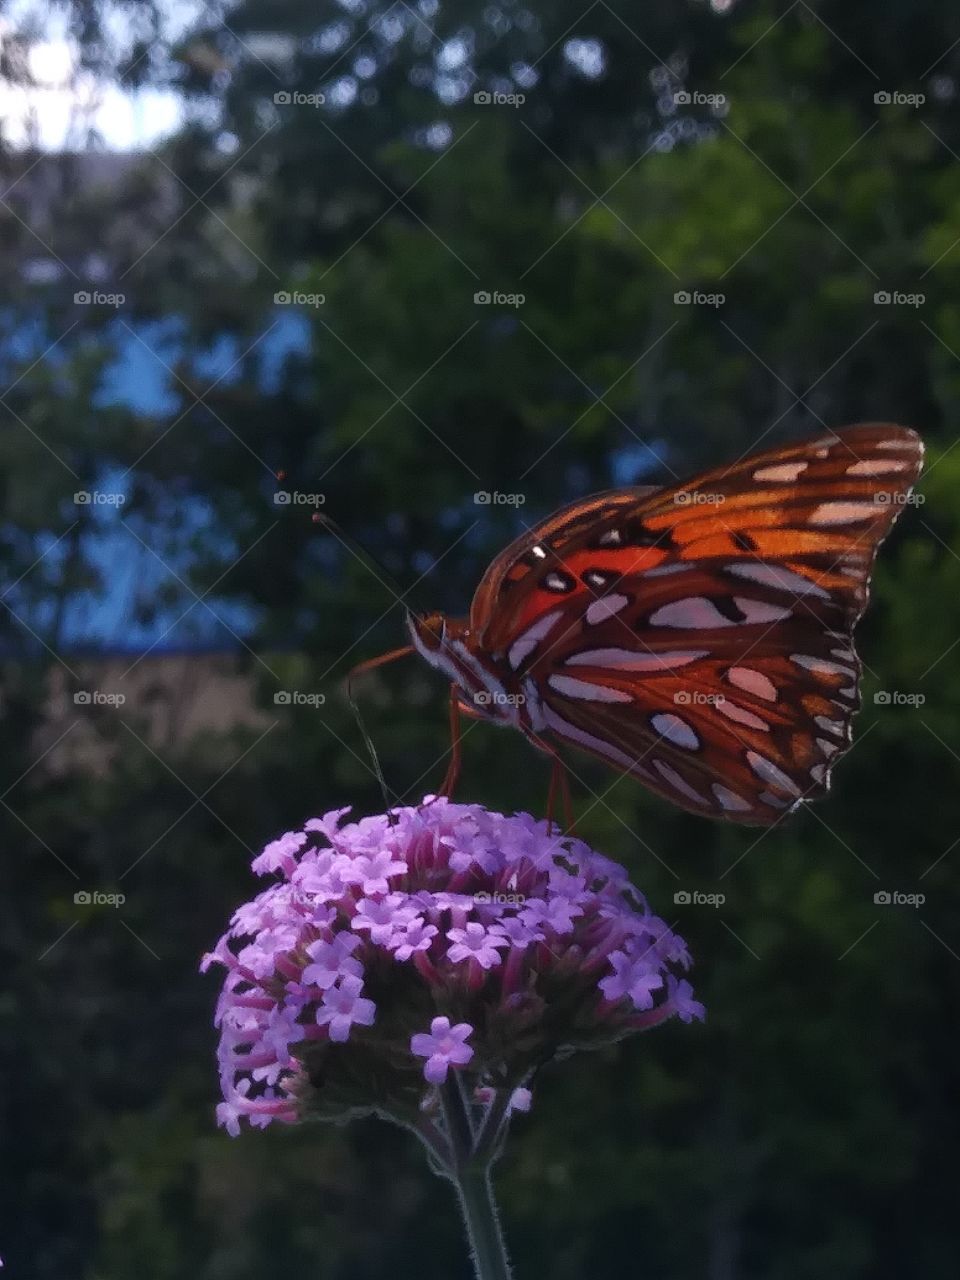 butterfly verbena